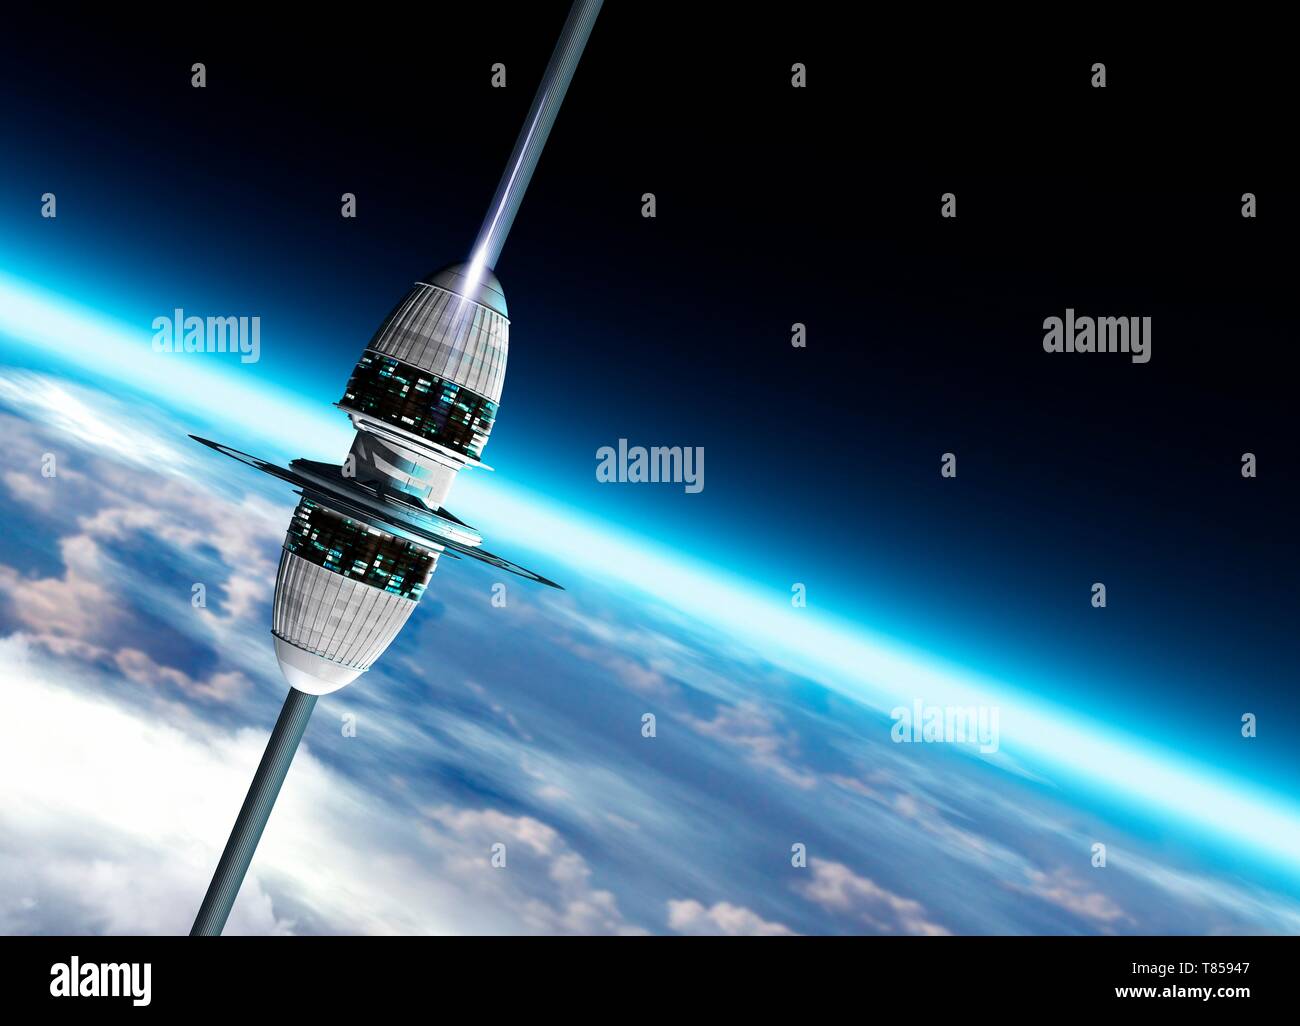 Space elevator, illustration Stock Photo